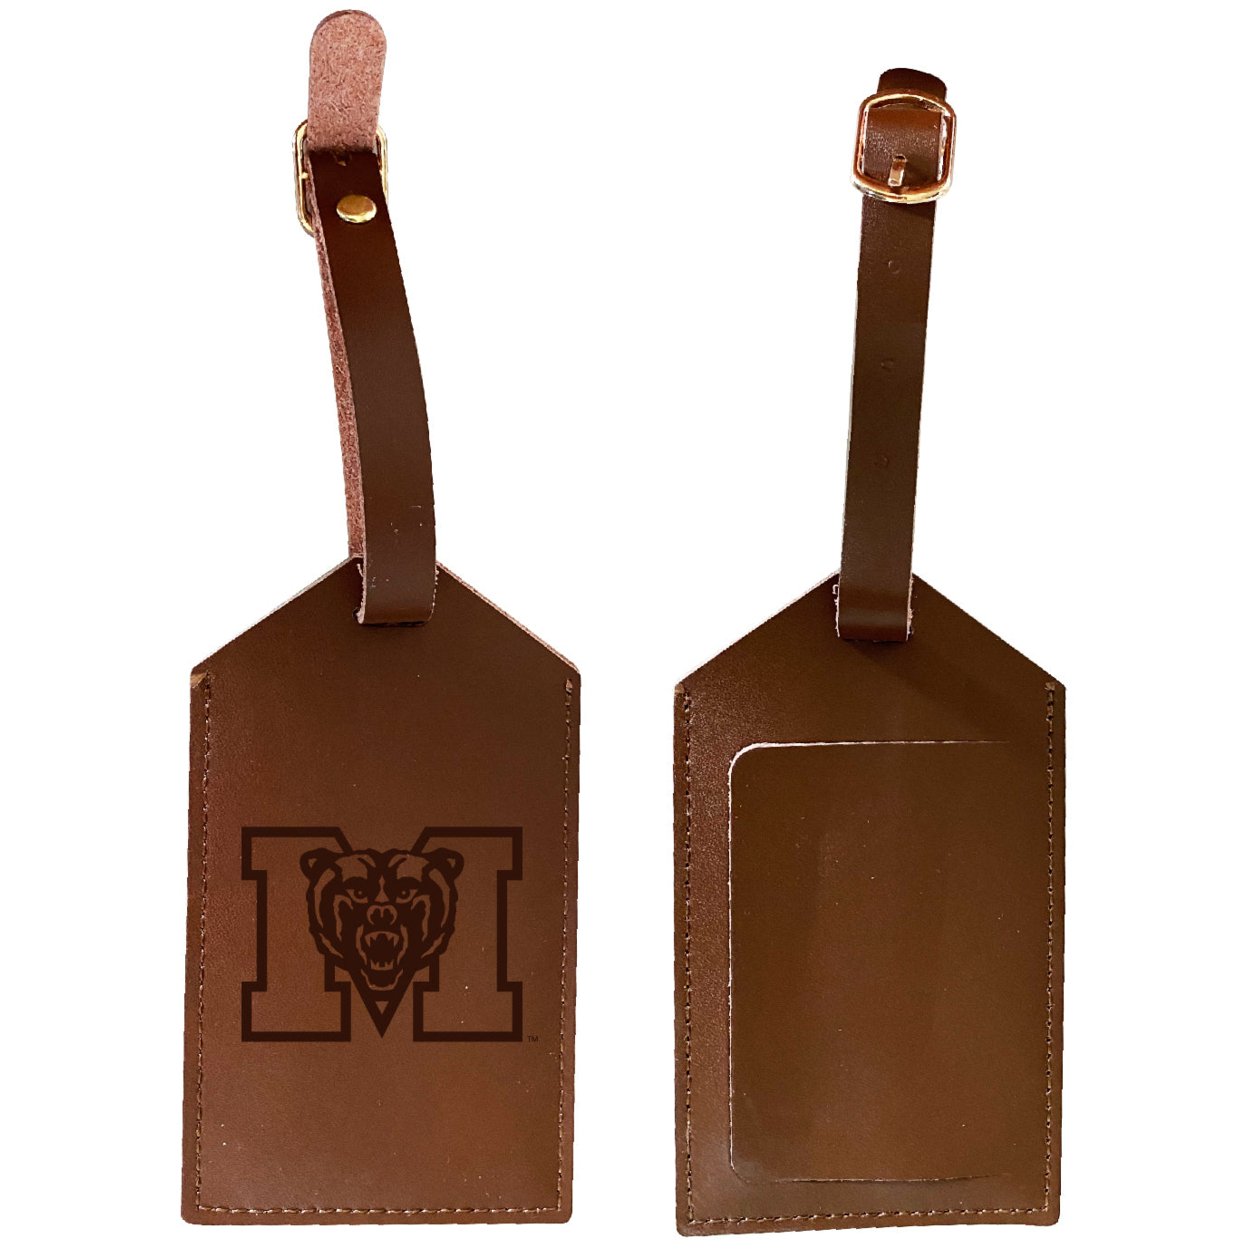 Mercer University Leather Luggage Tag Engraved